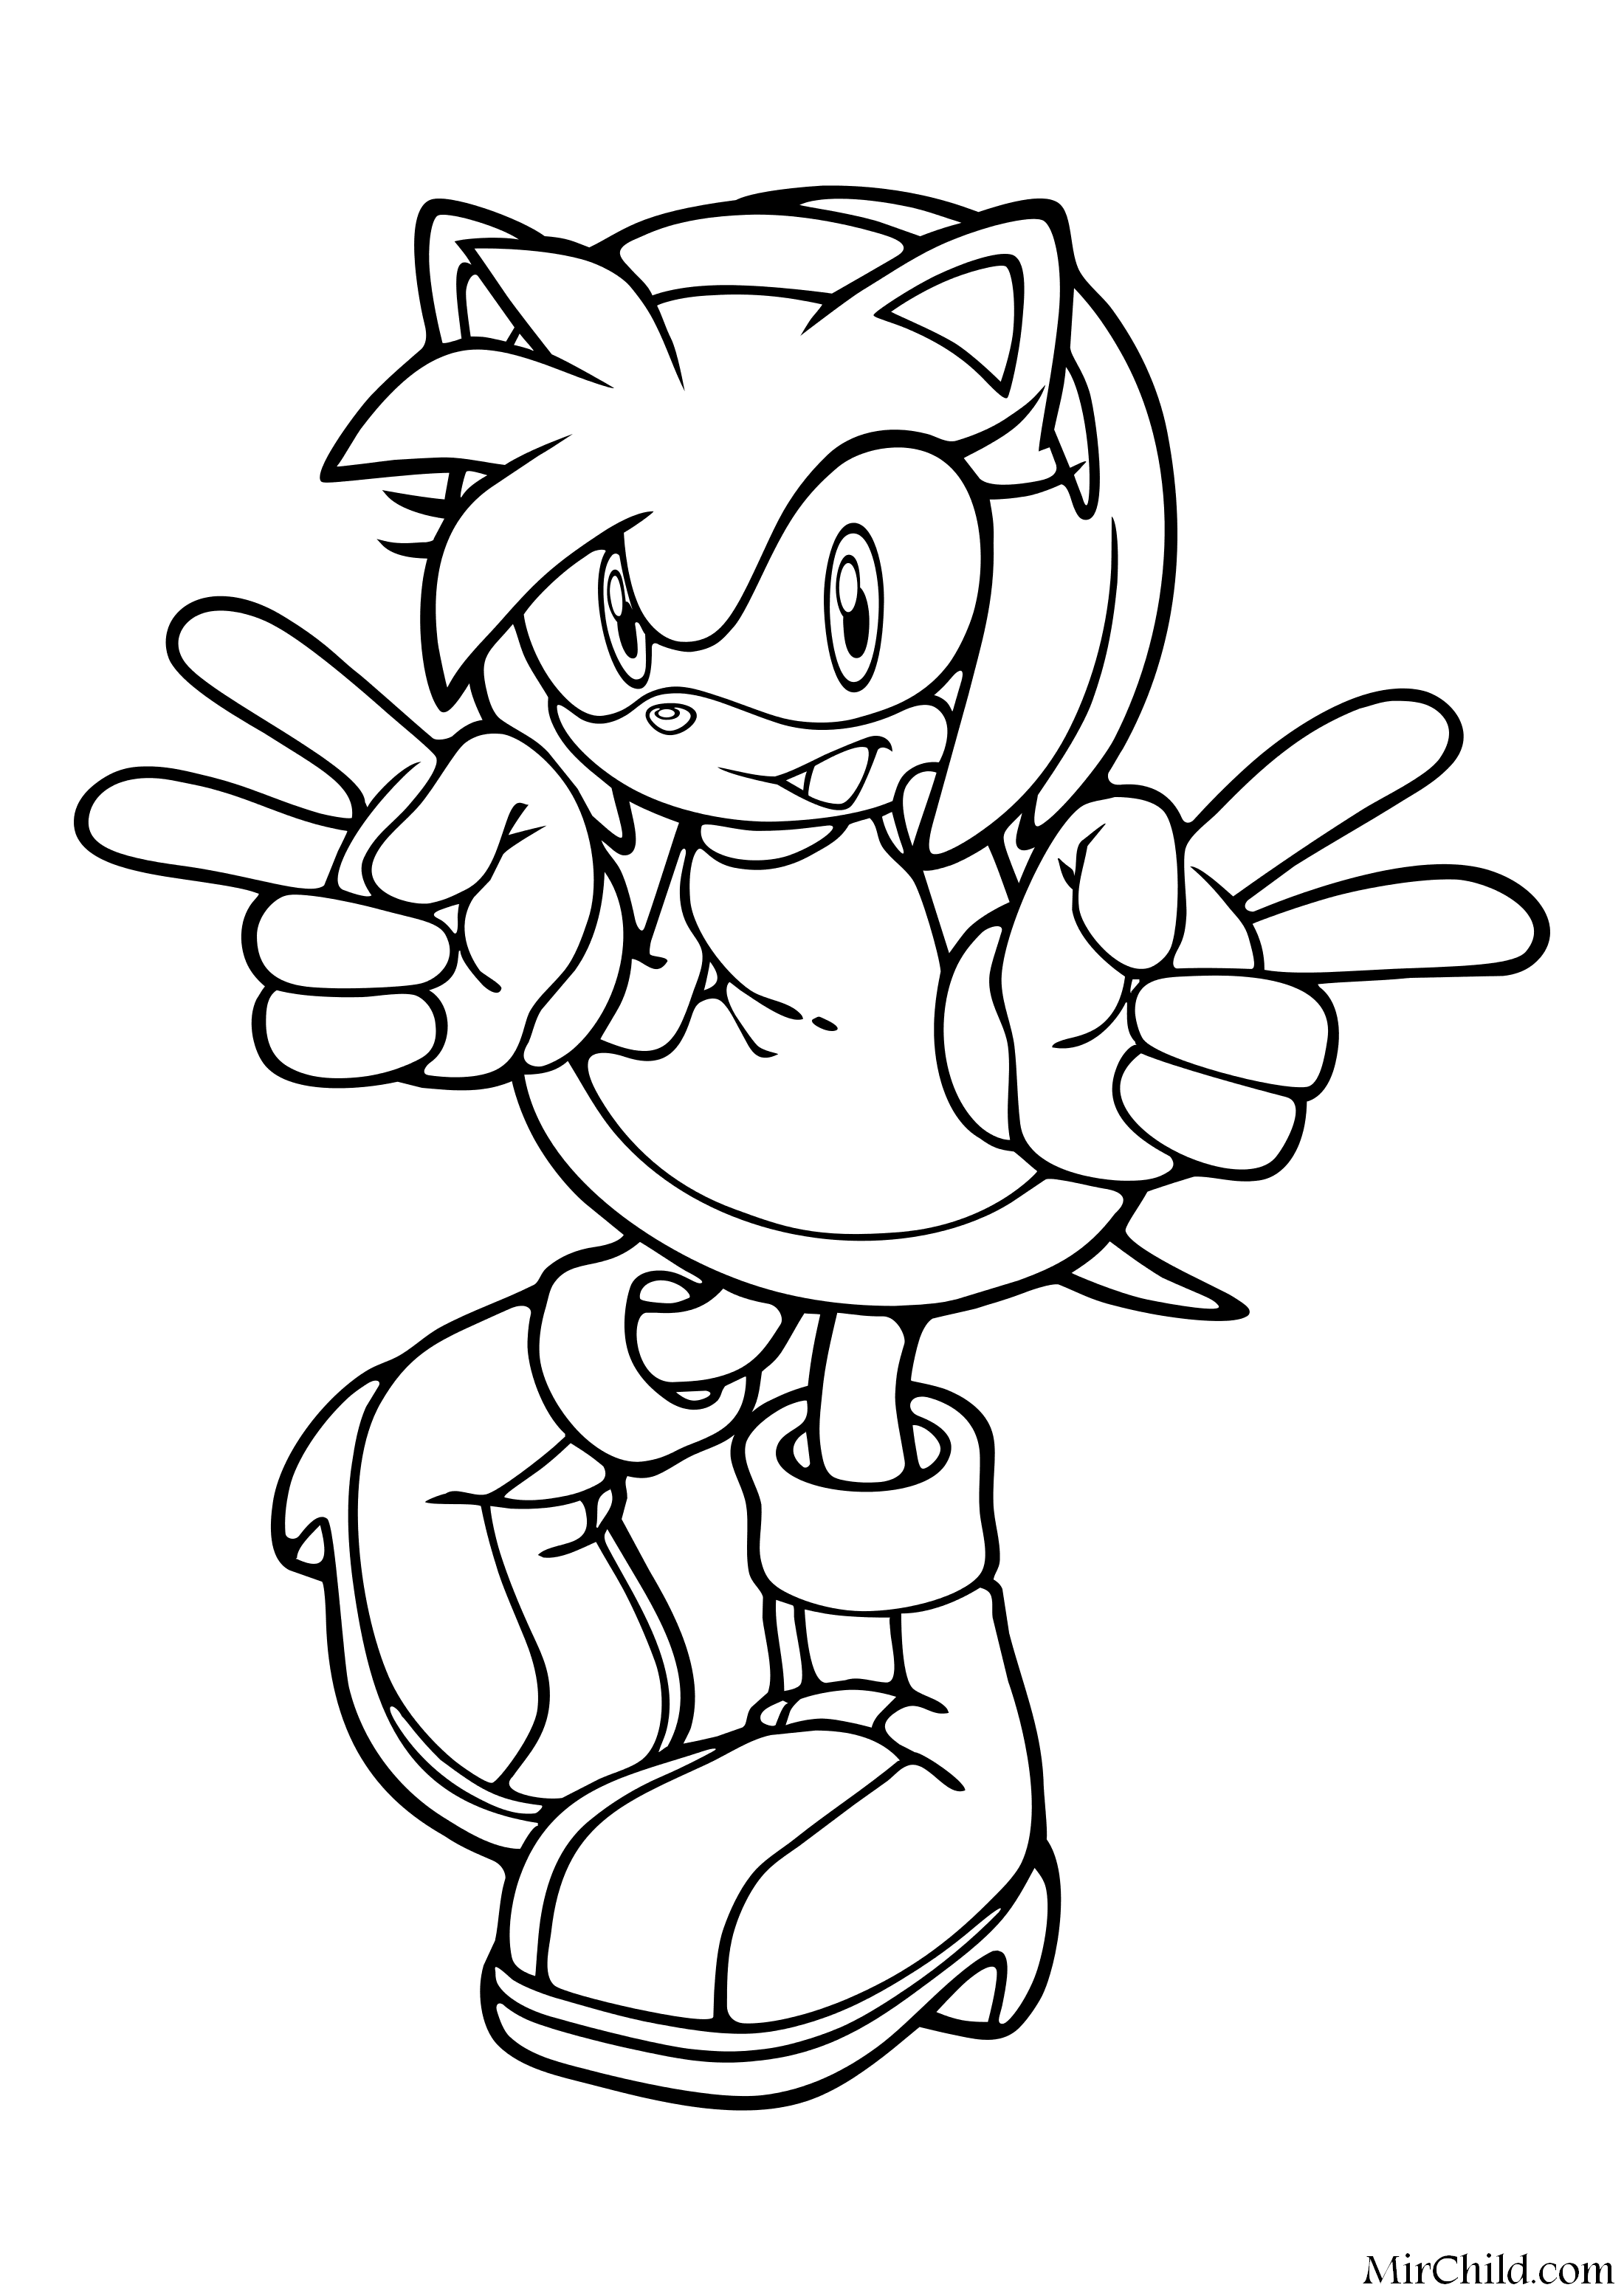 Раскраска - Sonic the Hedgehog - Эми Роуз влюблена в Соника.